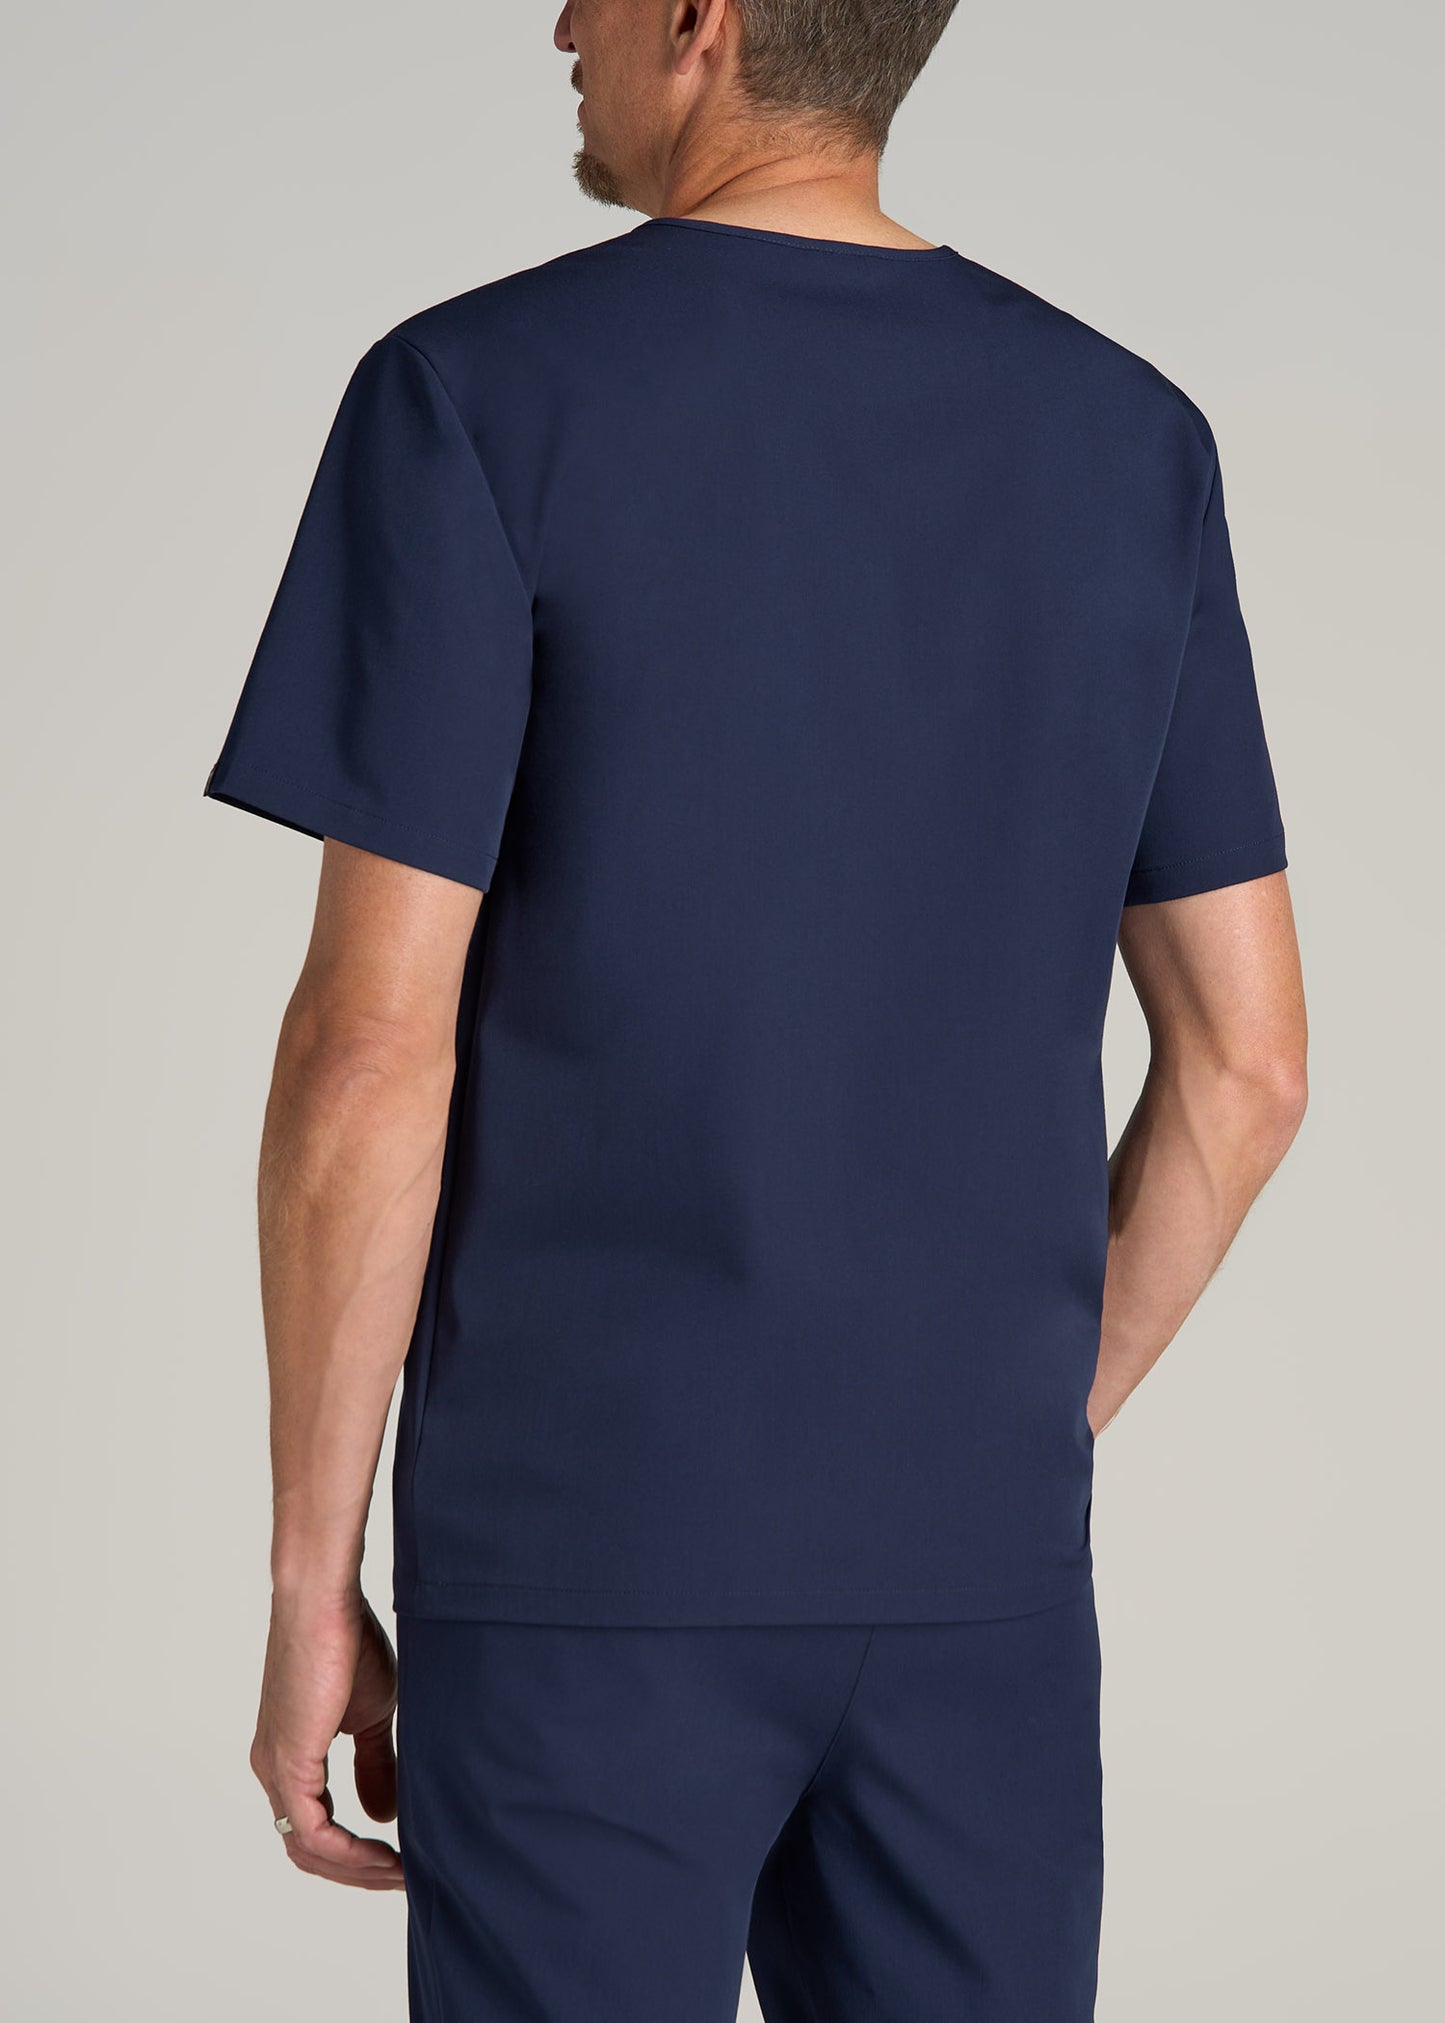 Short-Sleeve V-Neck Scrub Top for Tall Men in Patriot Blue